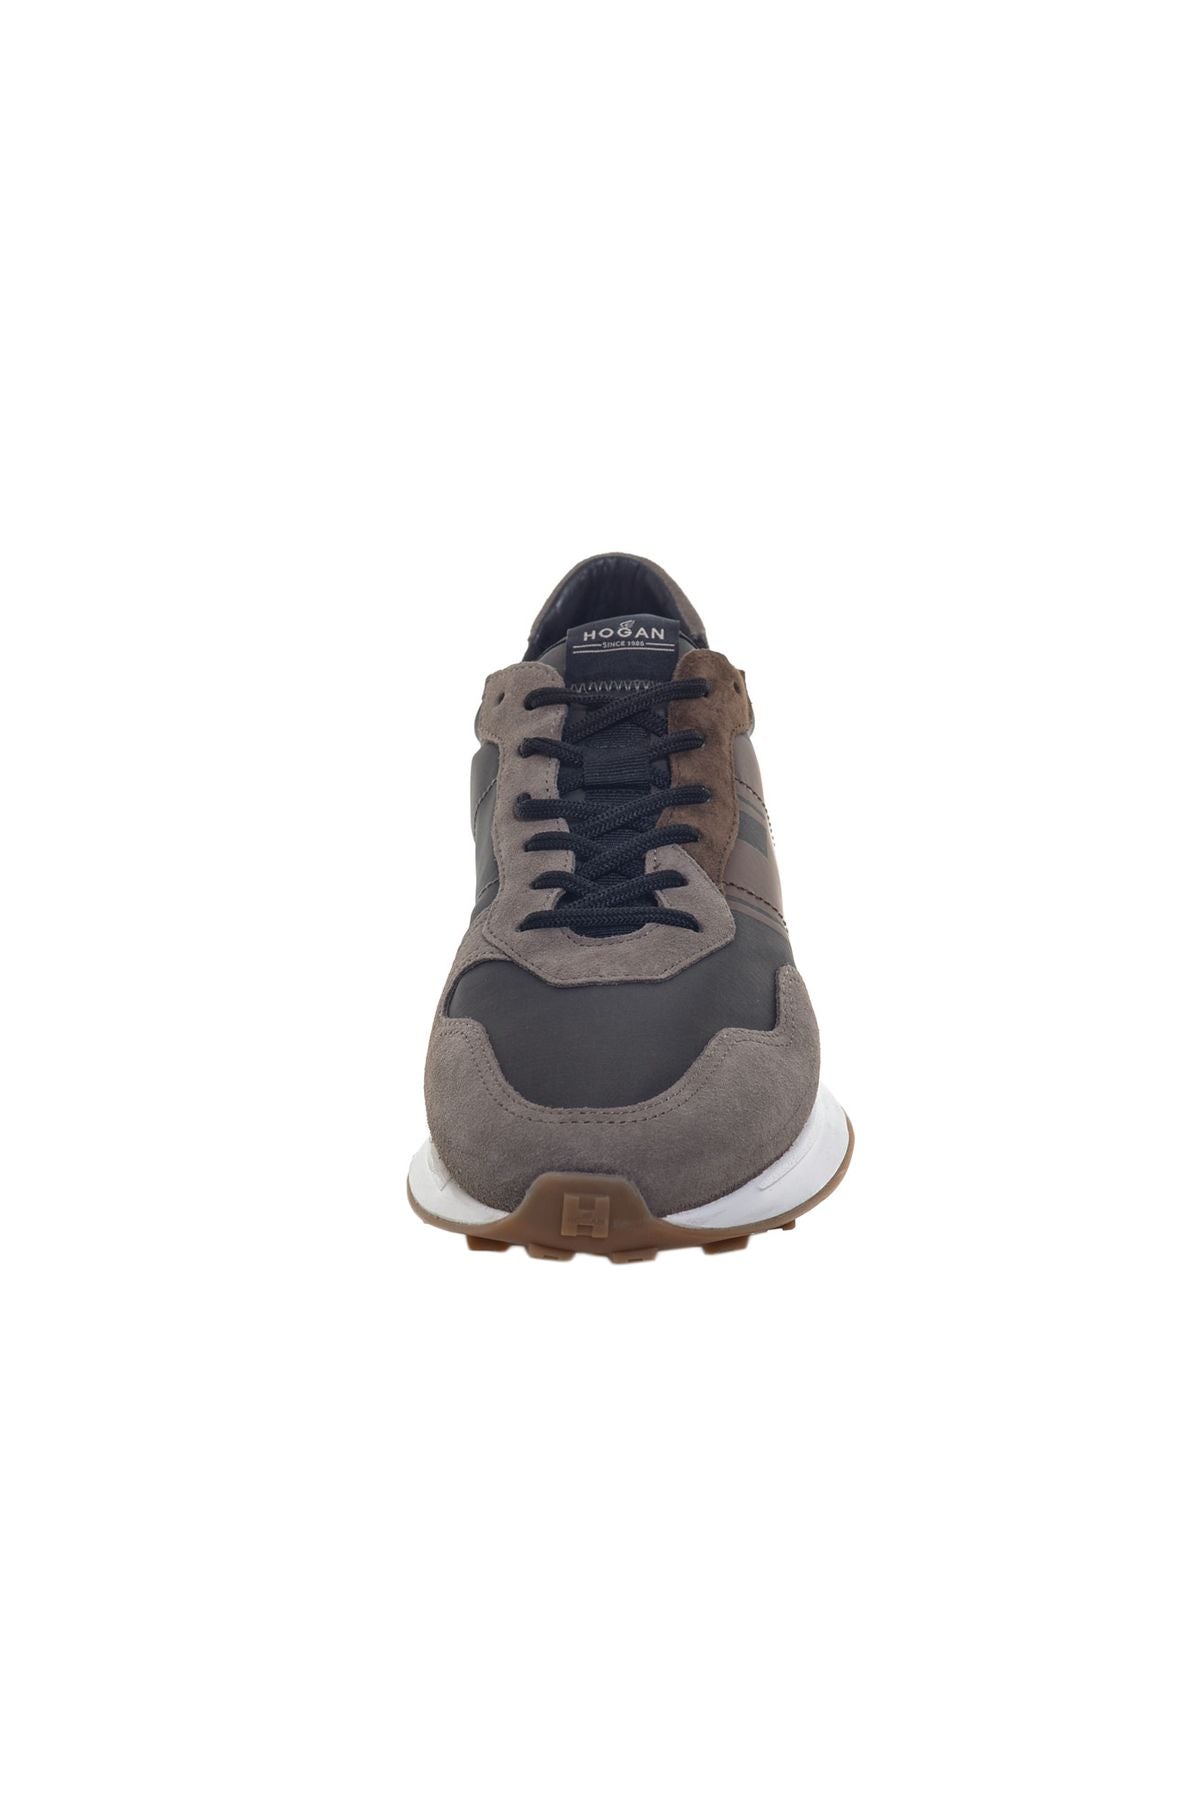 HOGAN Sneakers Autunno/Inverno hxm6010eg014b7914f